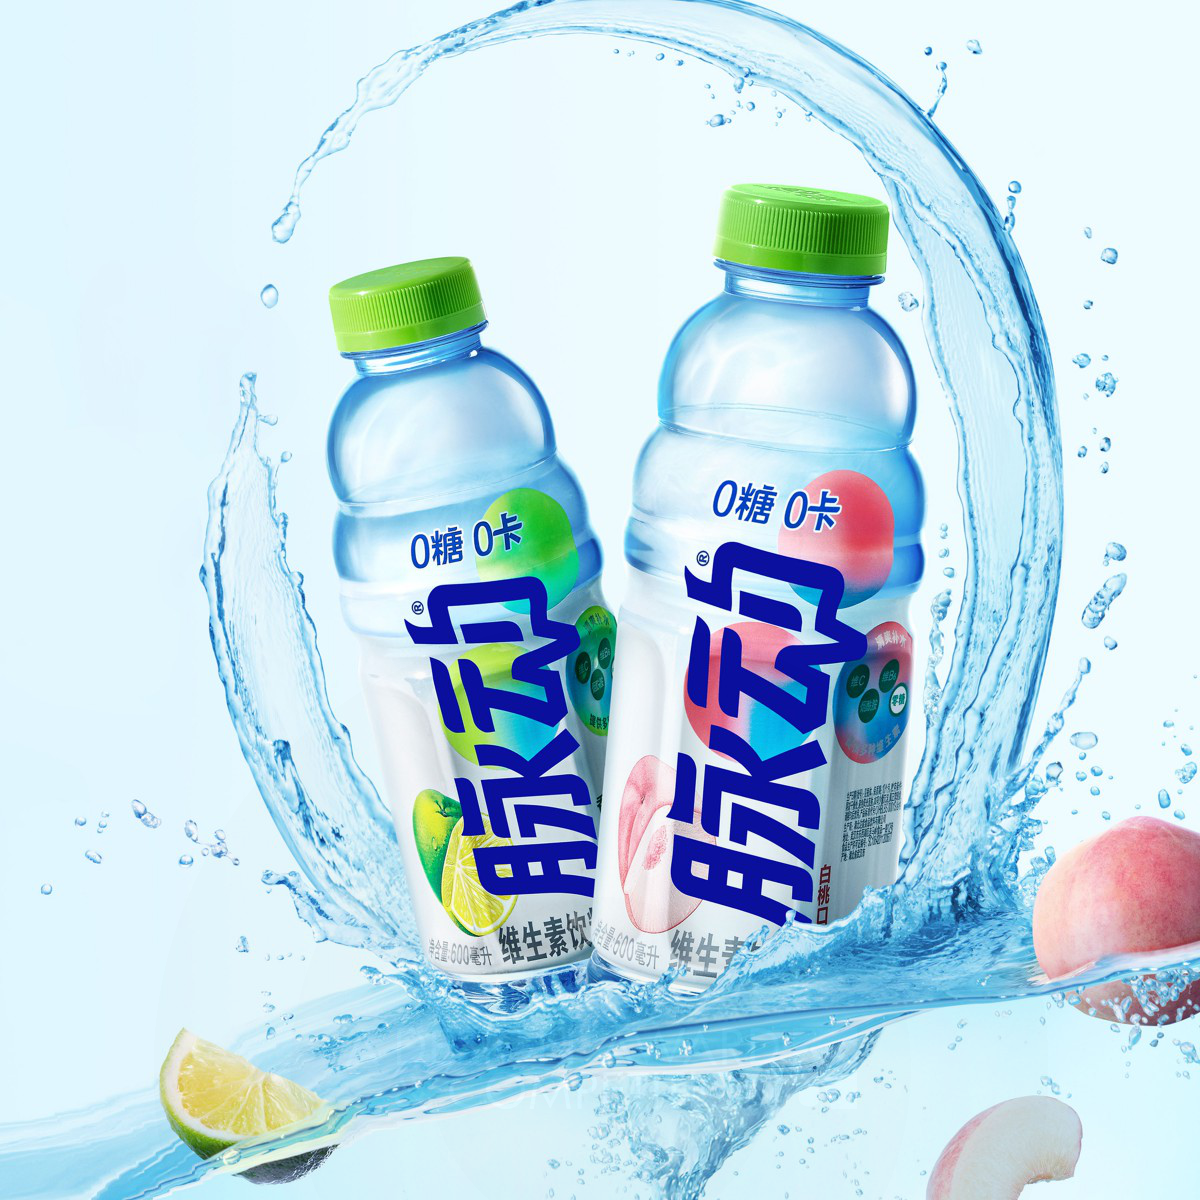 Mizone Zero Beverage Packaging by Blackandgold Design (Shanghai) Co., Ltd.